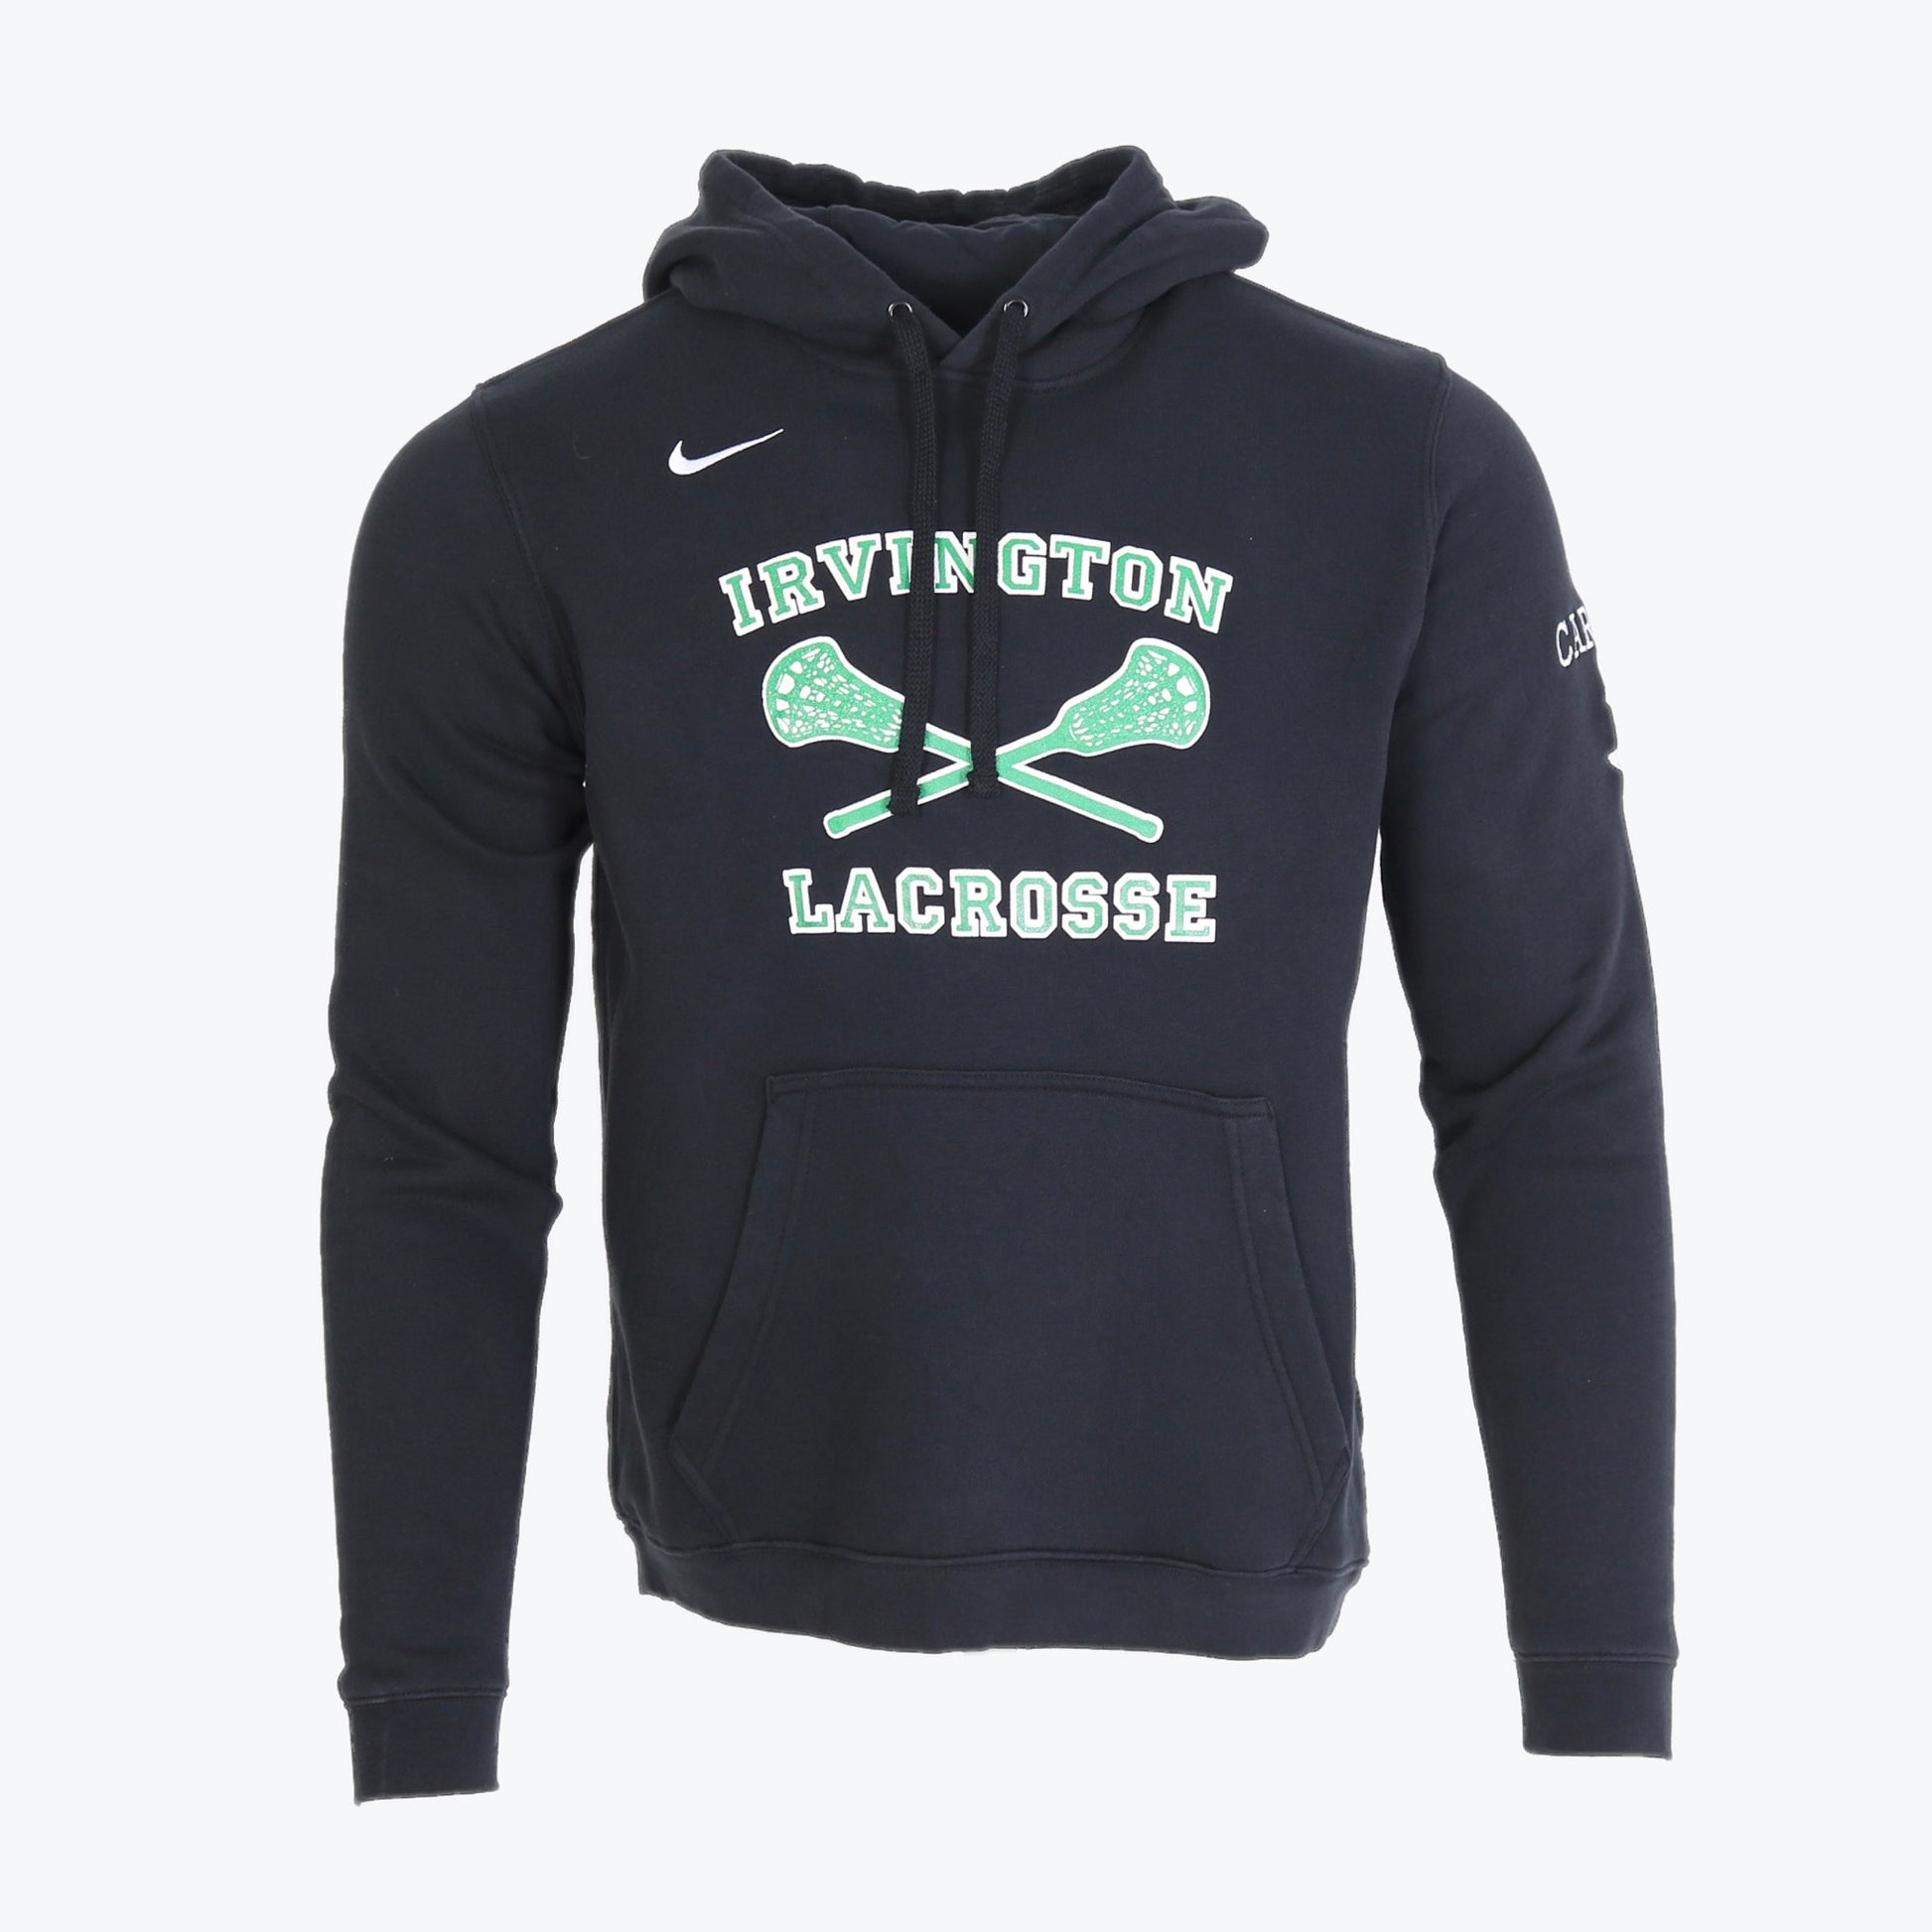 'Irvington Lacrosse' Hooded Sweatshirt - American Madness